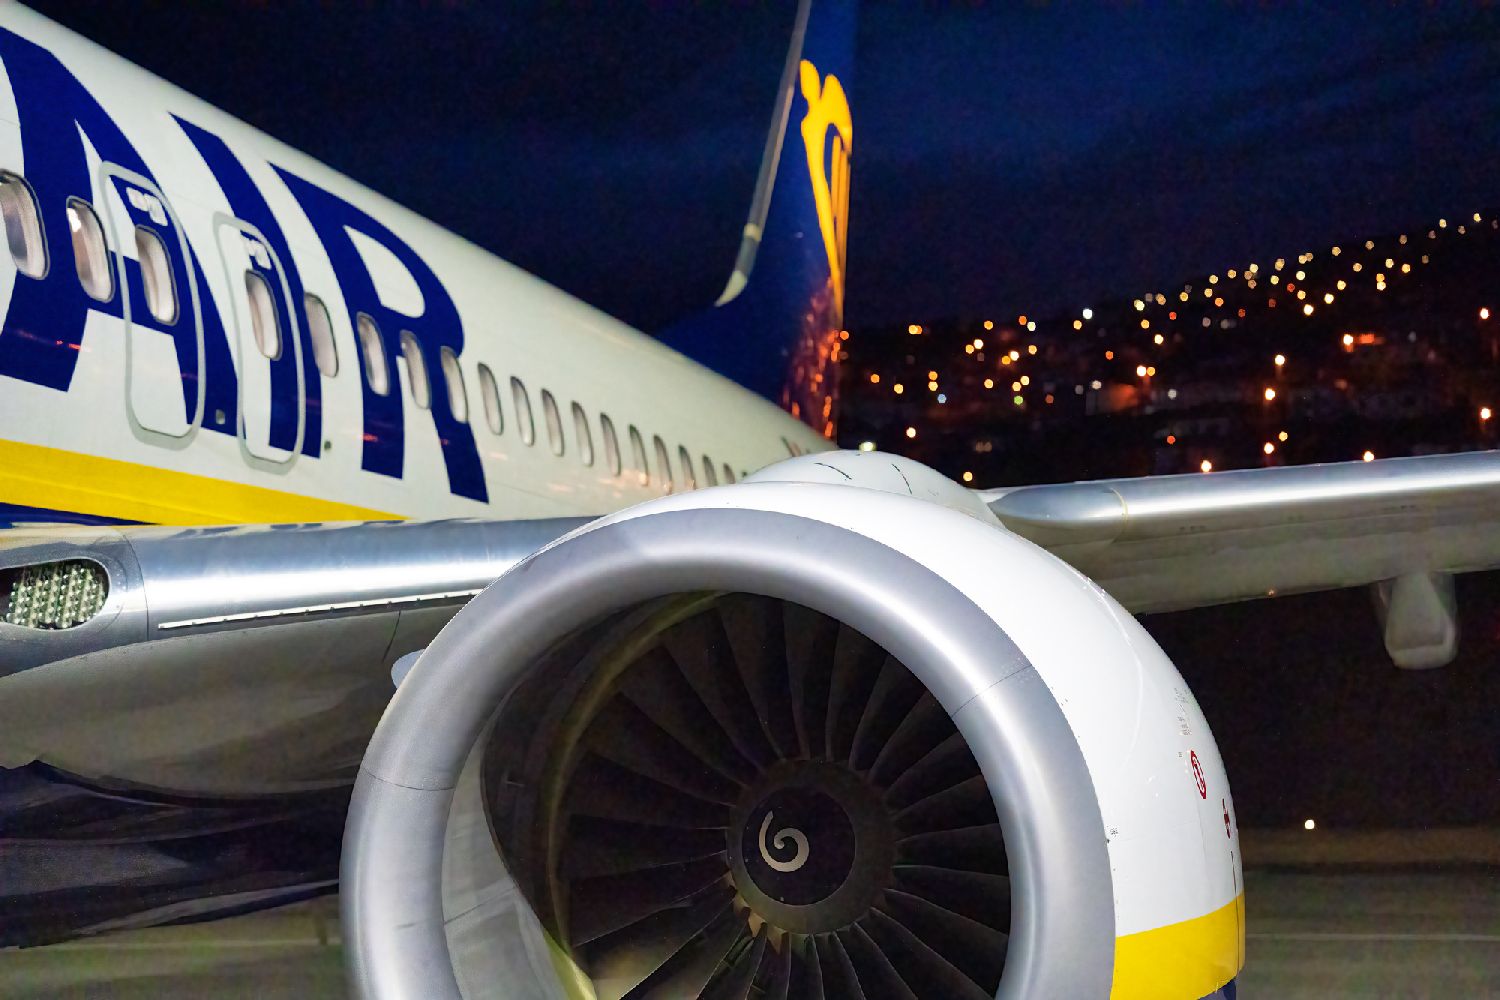 Ryanair airplane at night view.